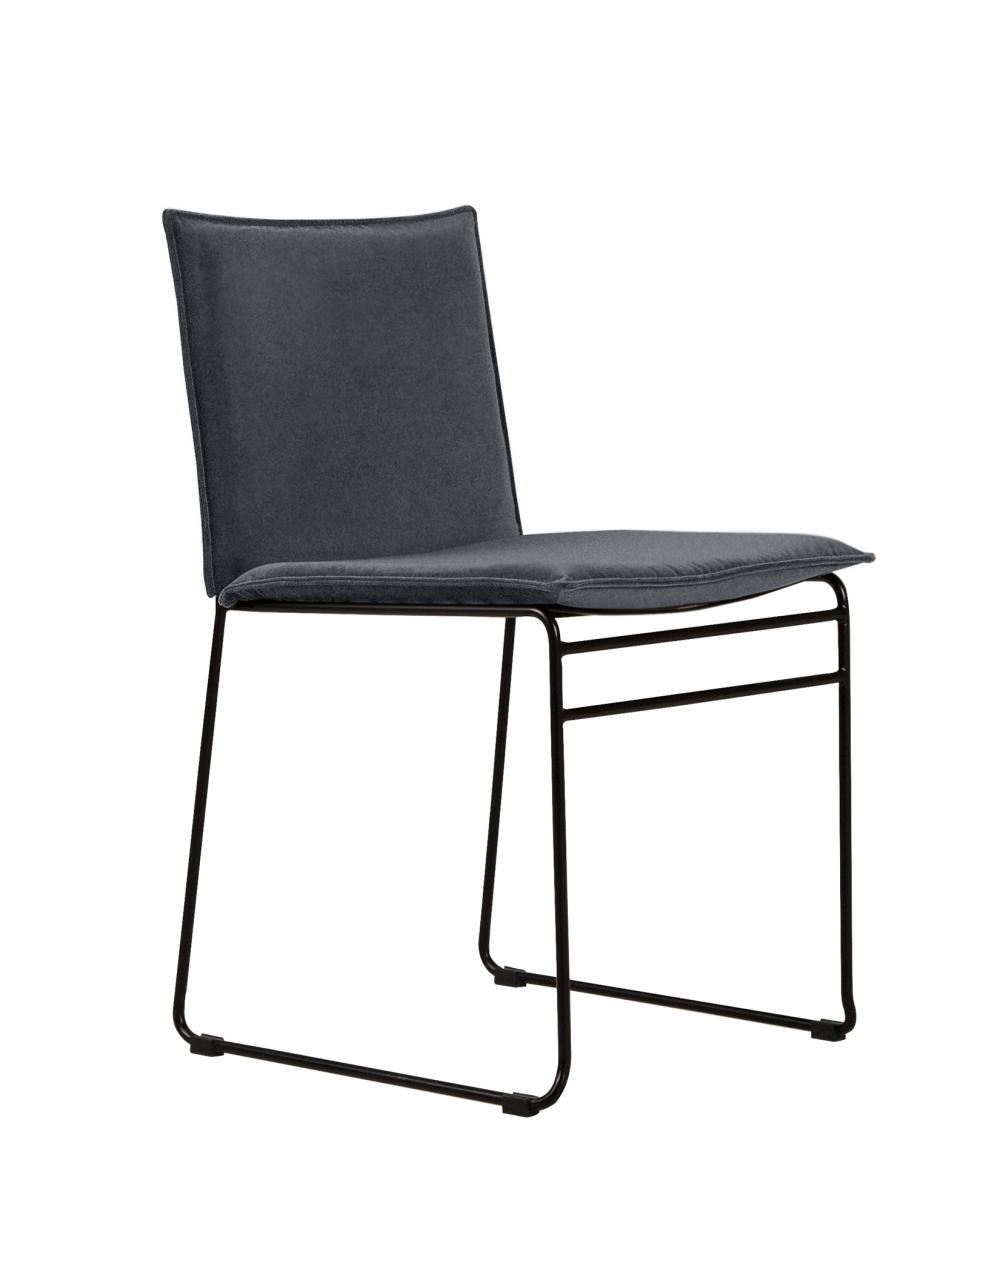 Kyst Dining Chair Outdoor Black Steel Chair Dark Grey